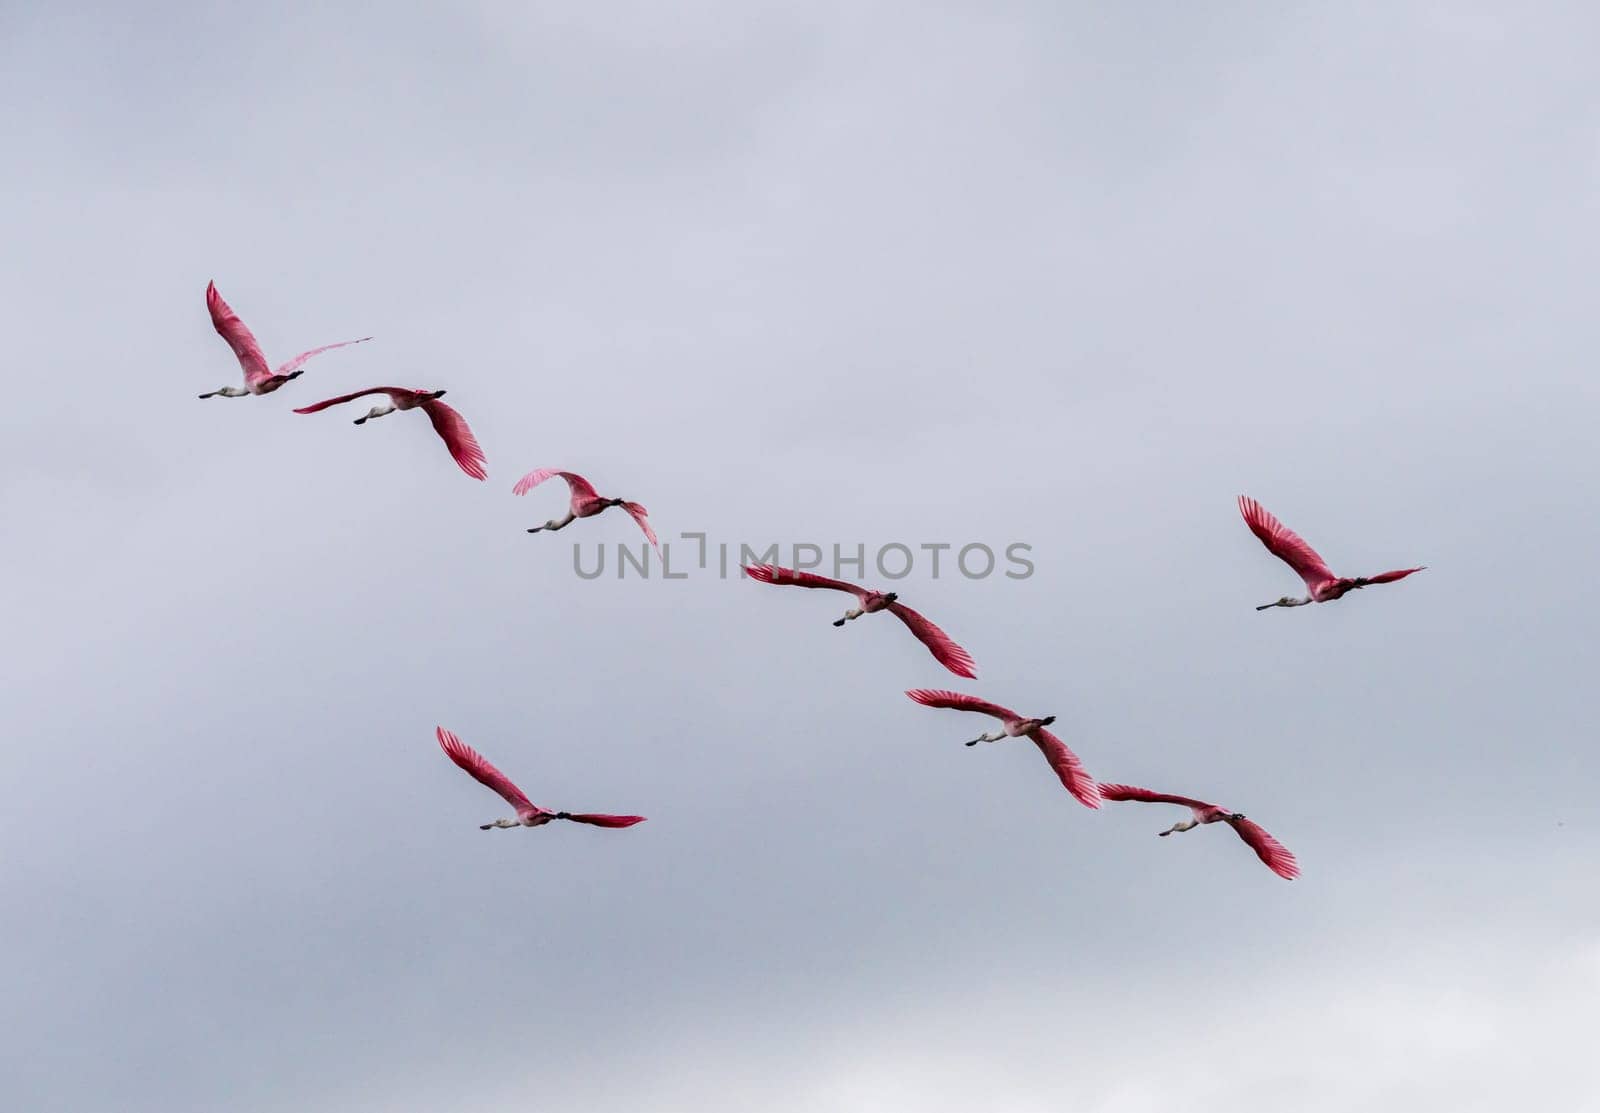 Flock of Roseate spoonbill birds taking flight in Atchafalaya basin by steheap